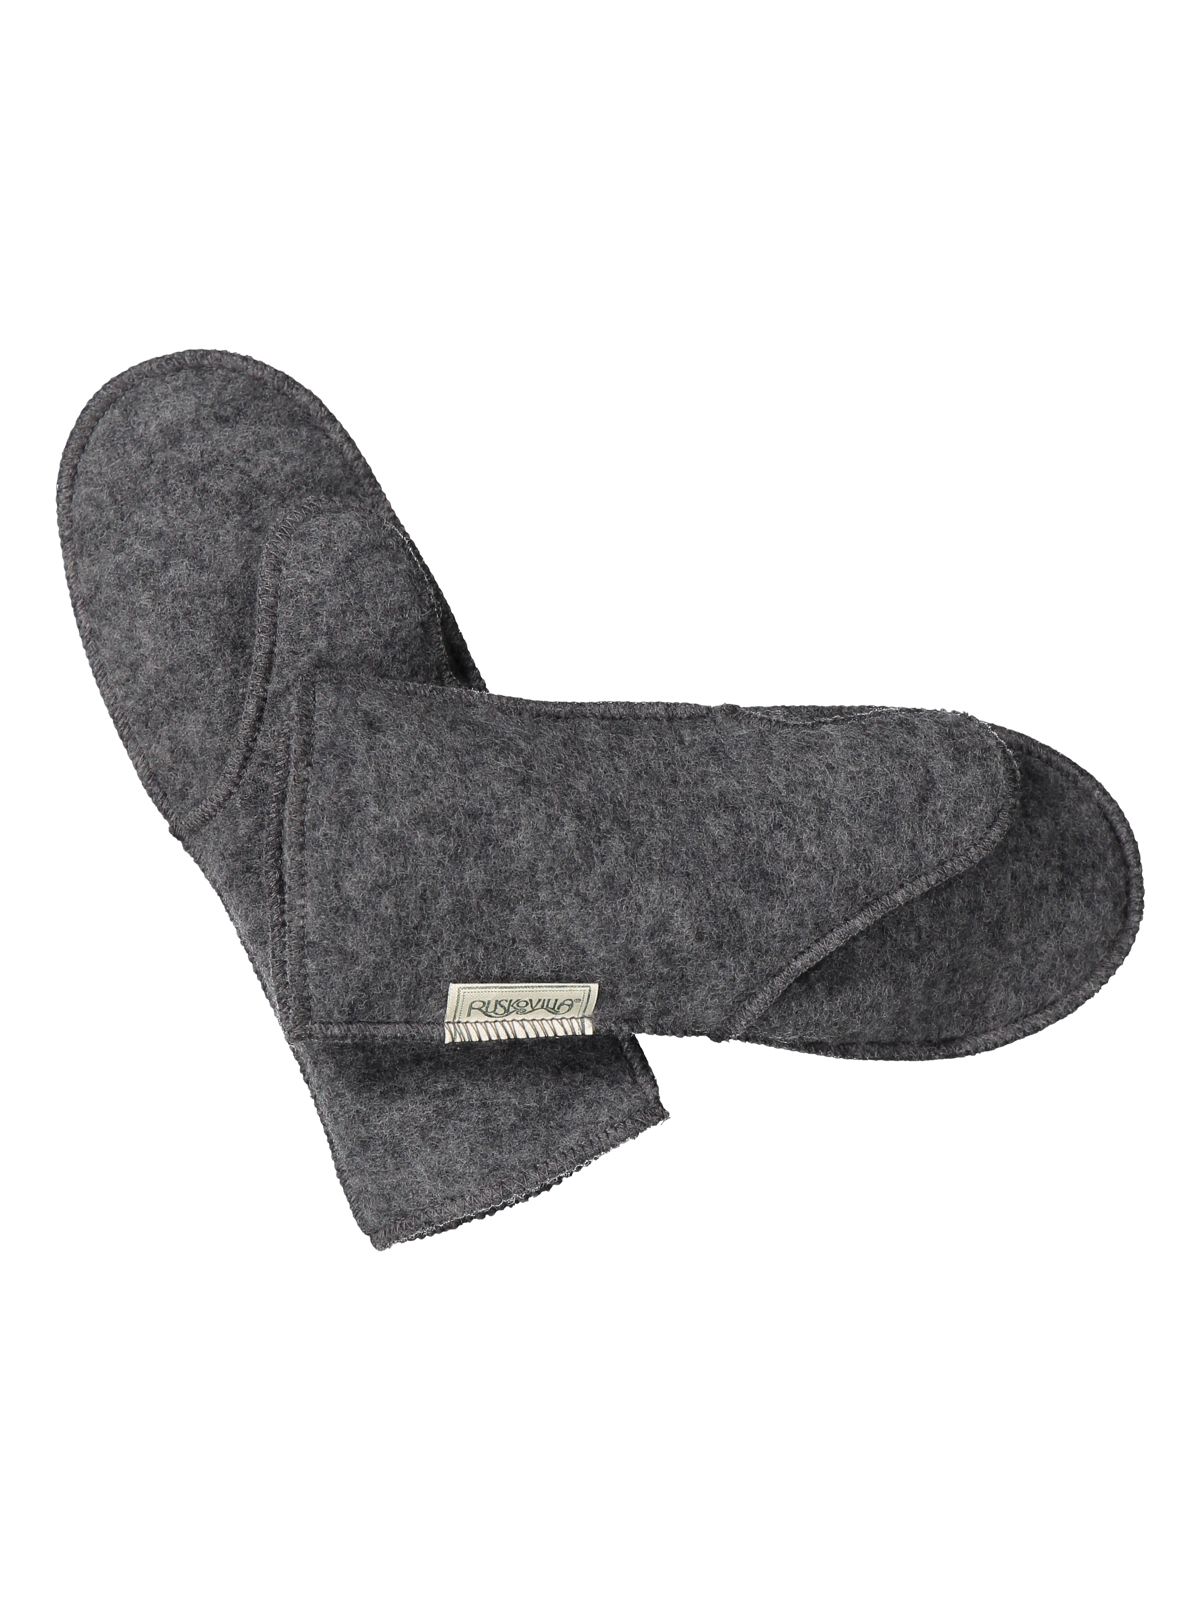 Ruskovilla's grey organic merino wool fleece mittens